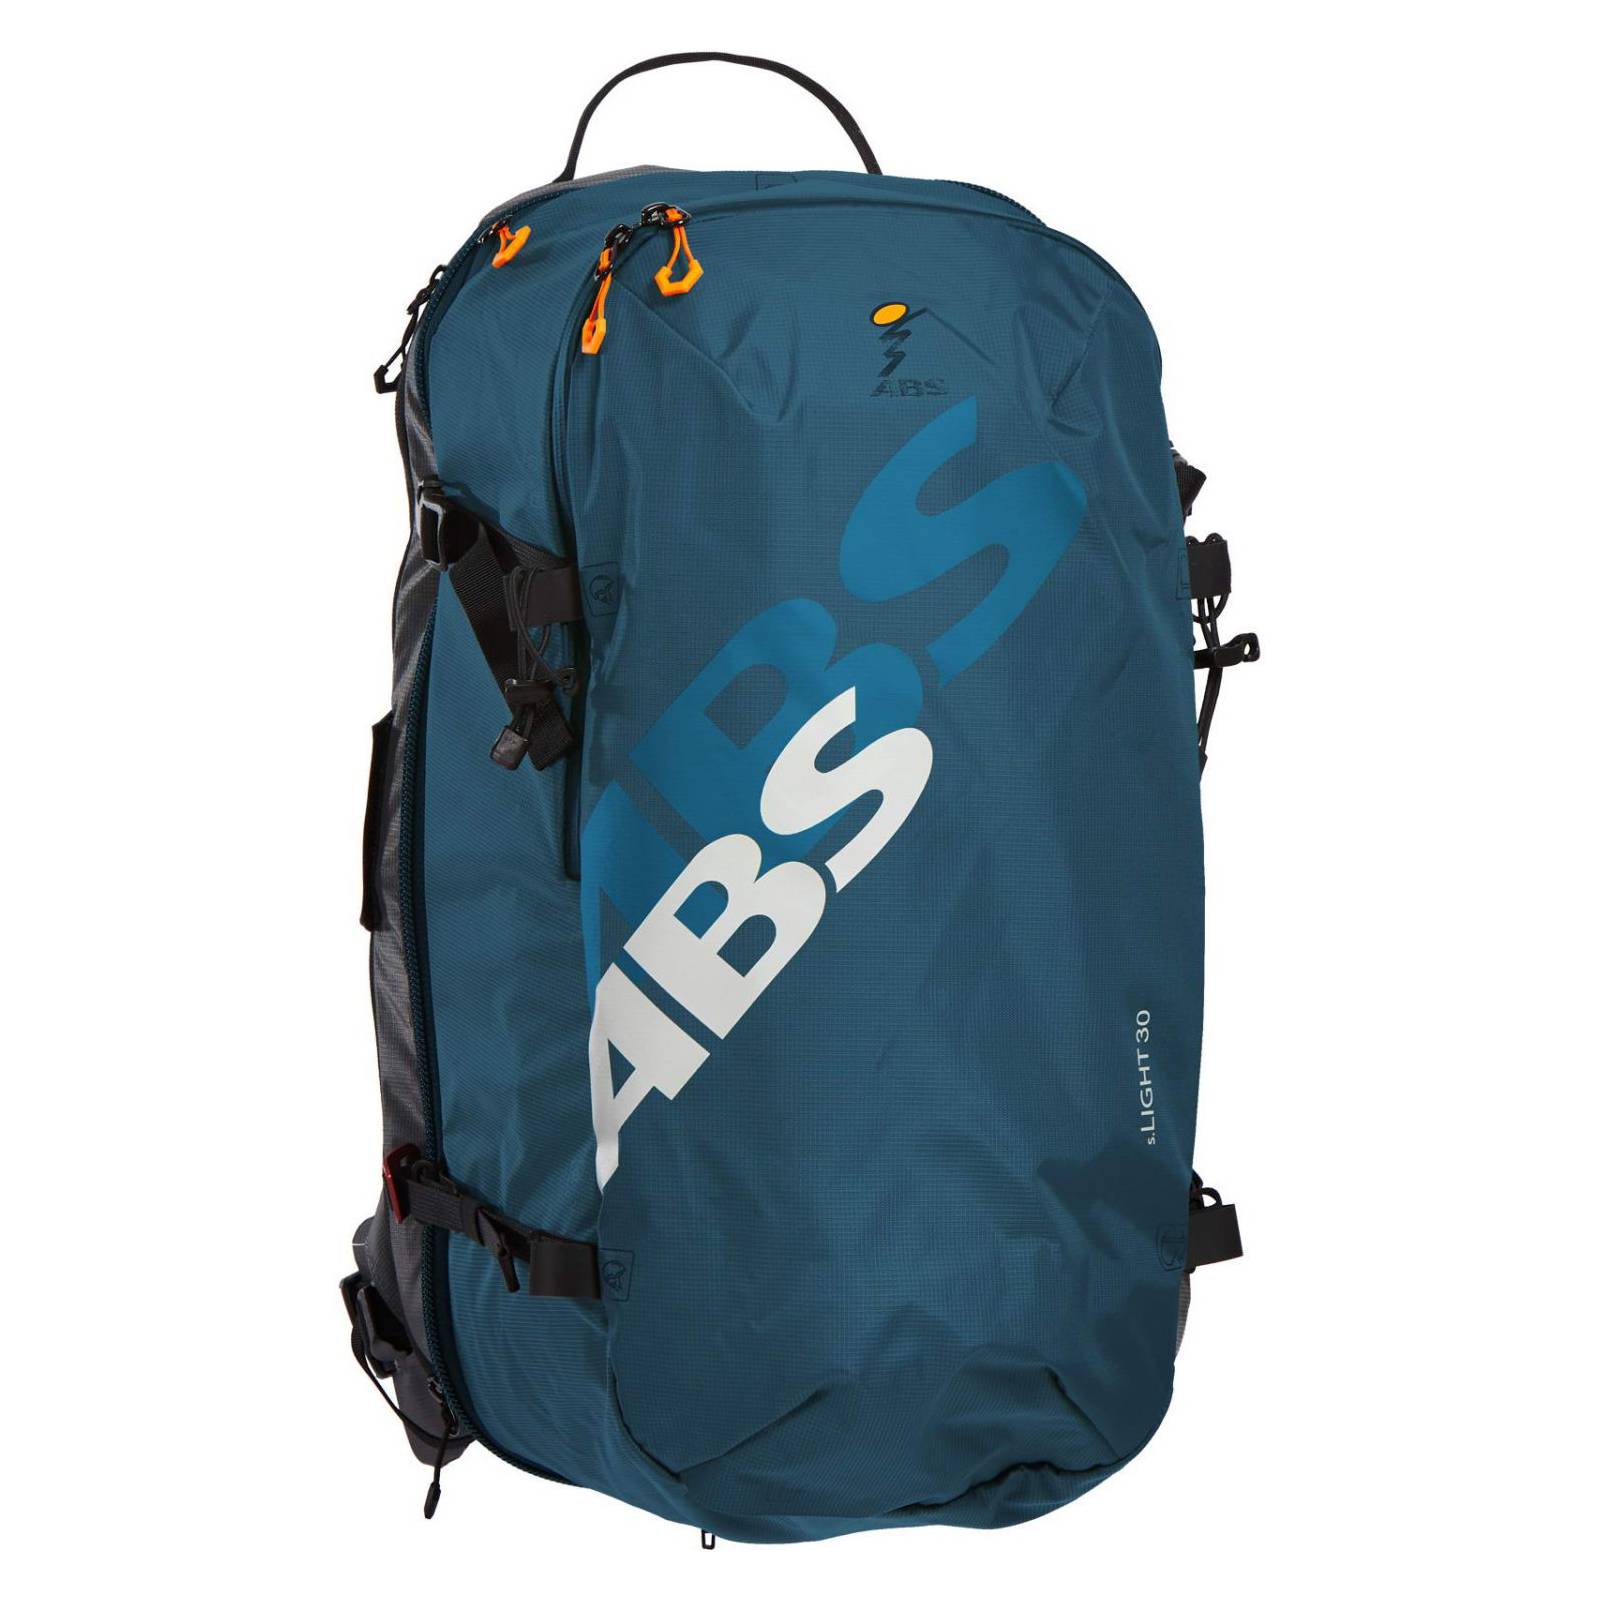 ABS s.LIGHT compact Zip-On 30 blau